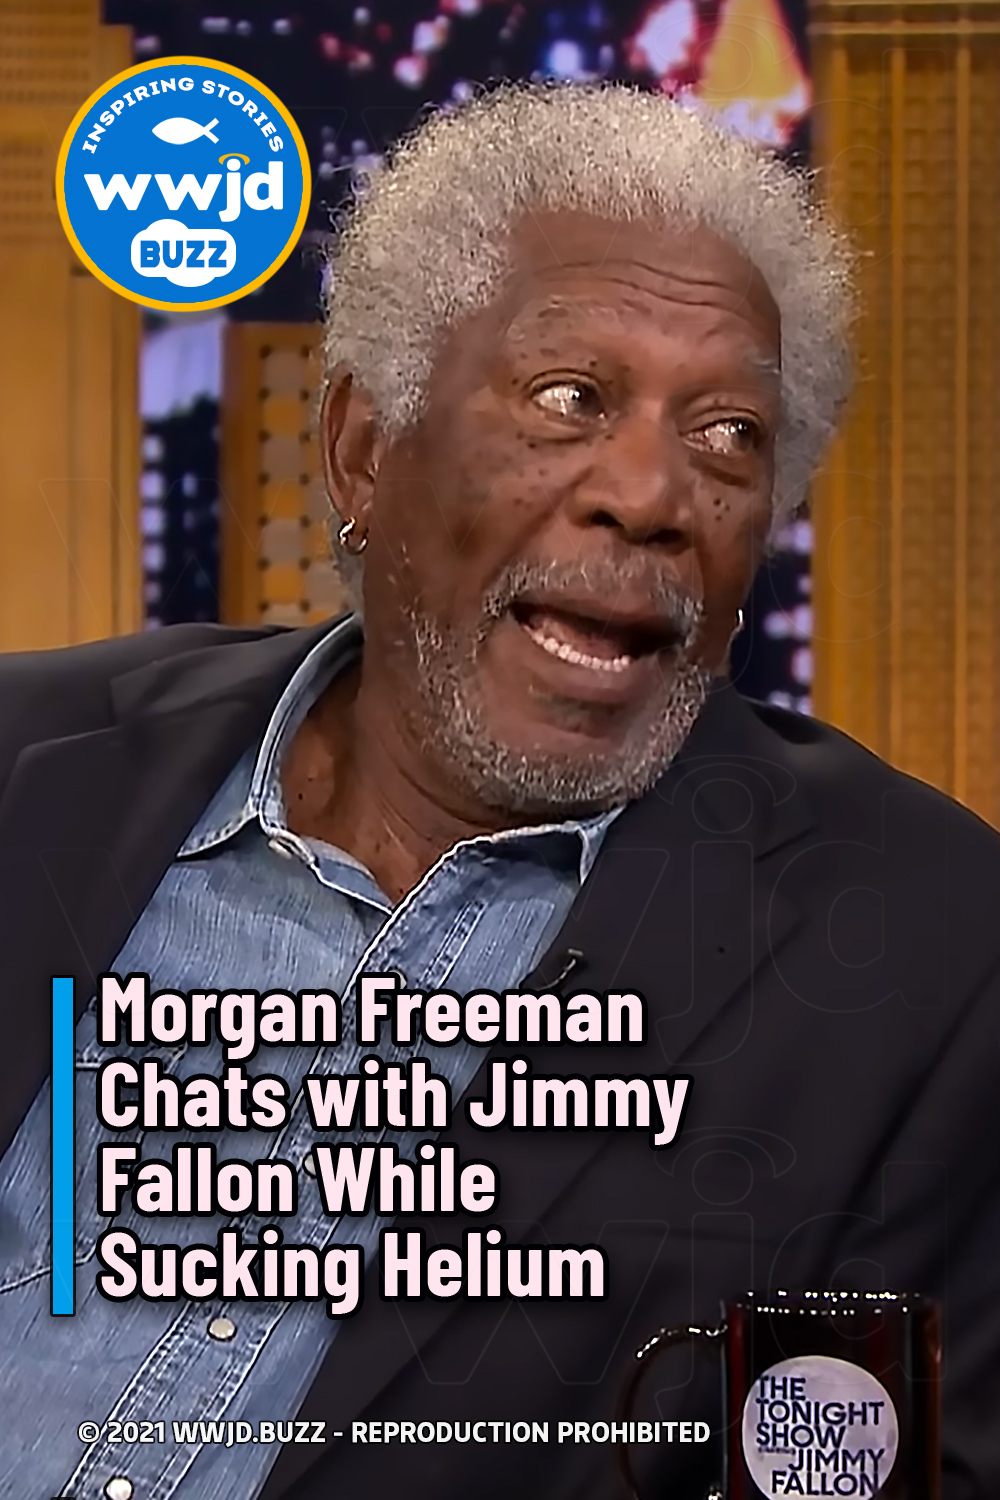 Morgan Freeman Chats with Jimmy Fallon While Sucking Helium